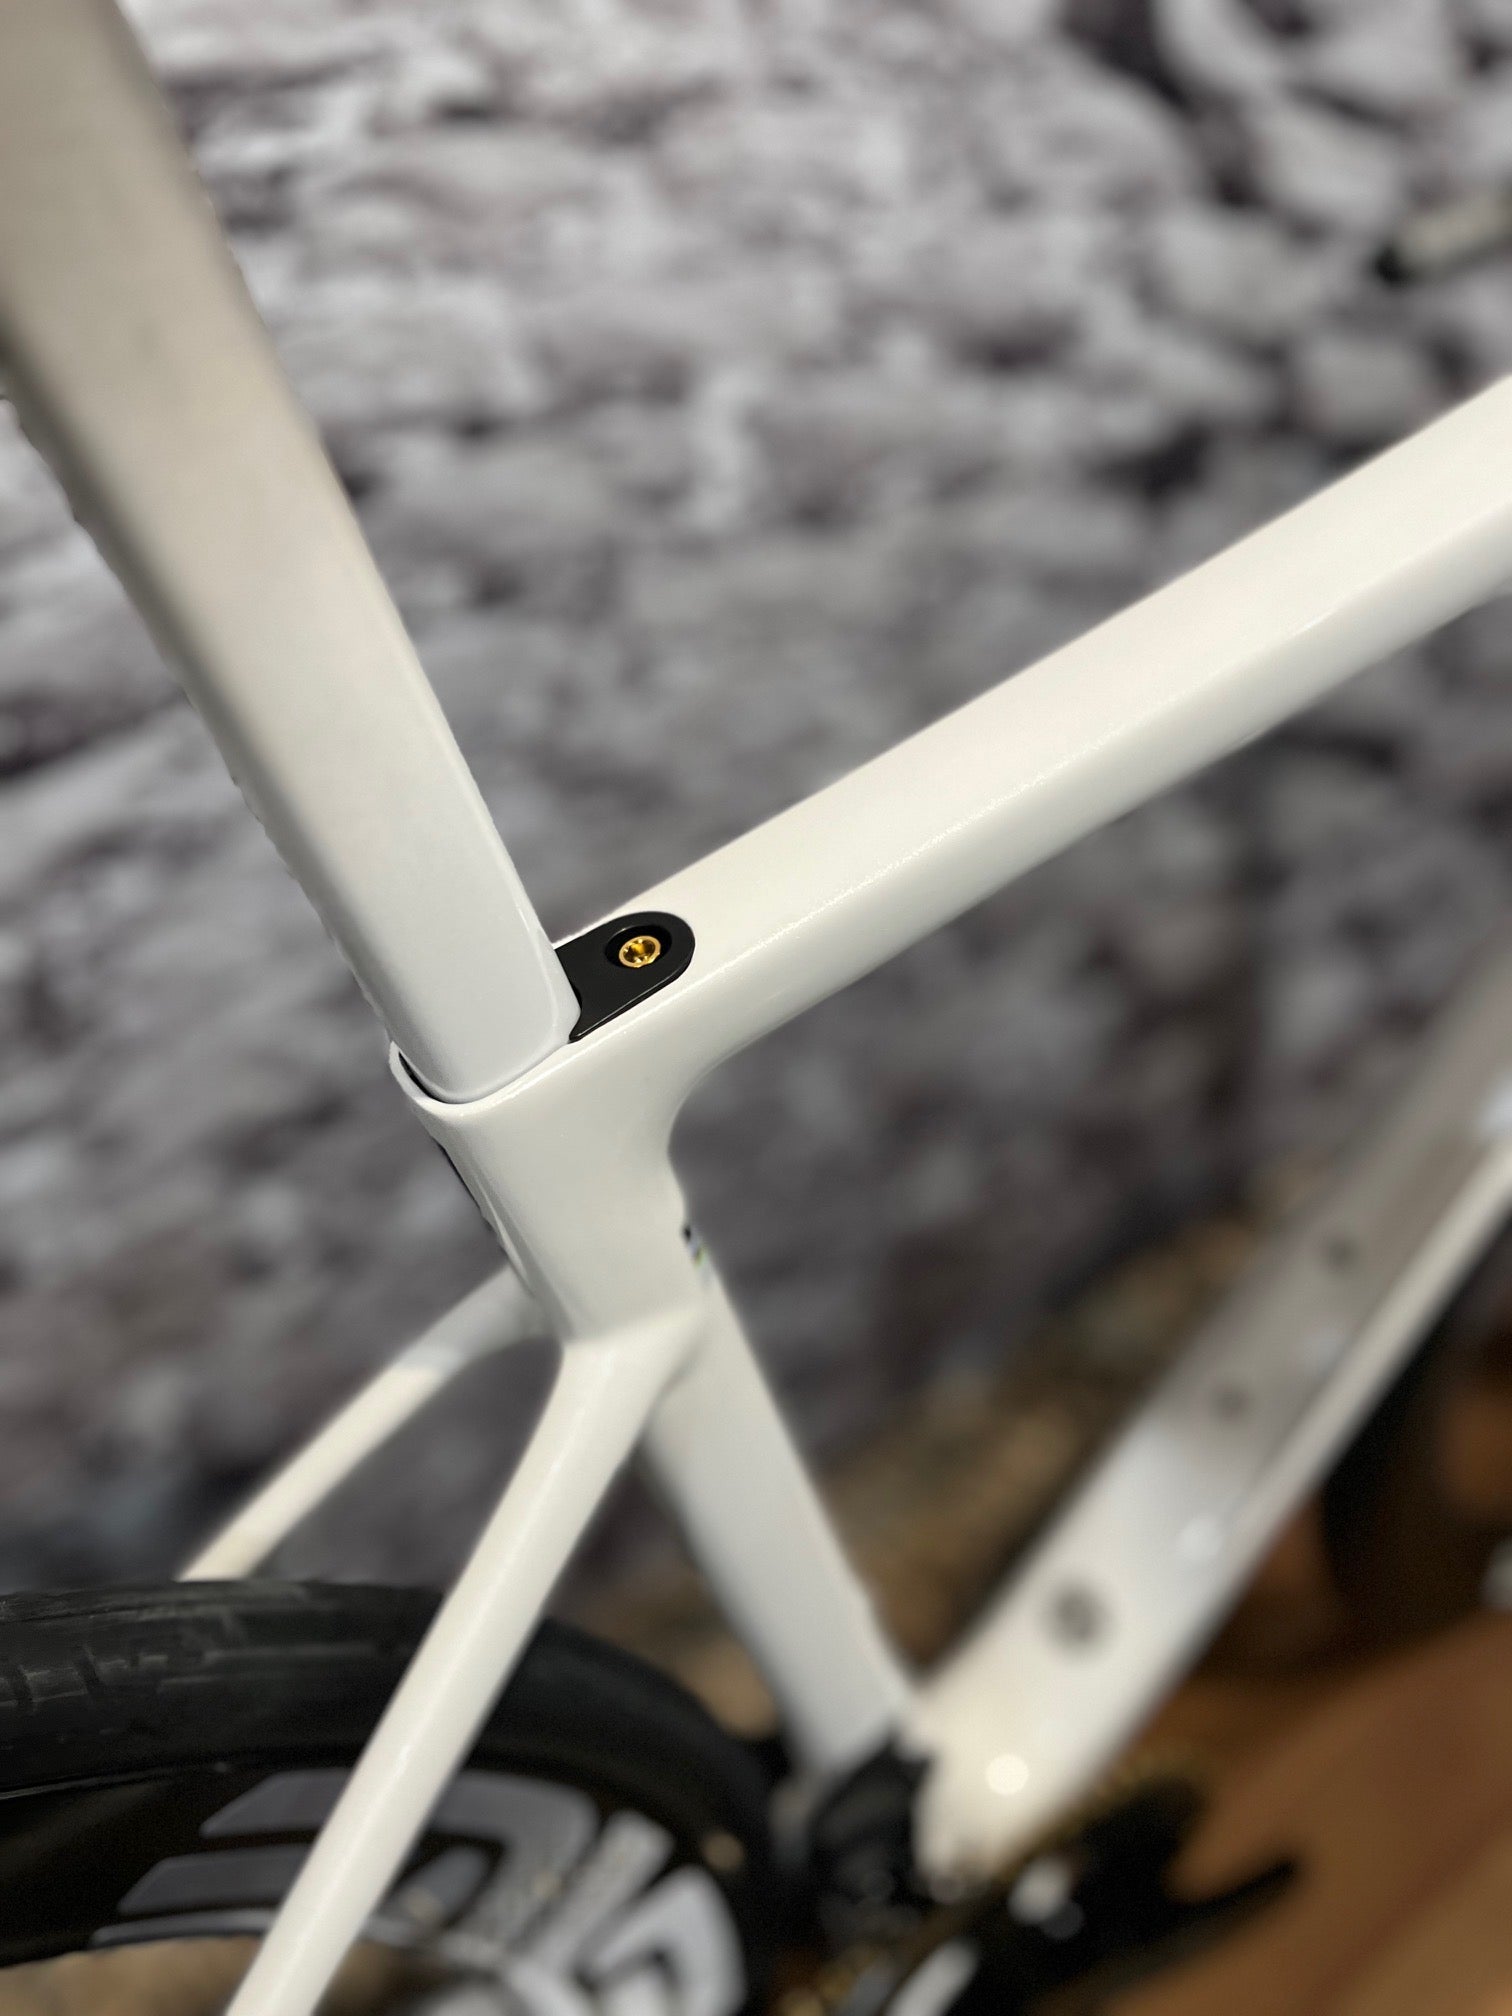 Enve Composites Melee Carbon Disc Road Bike - Full Custom